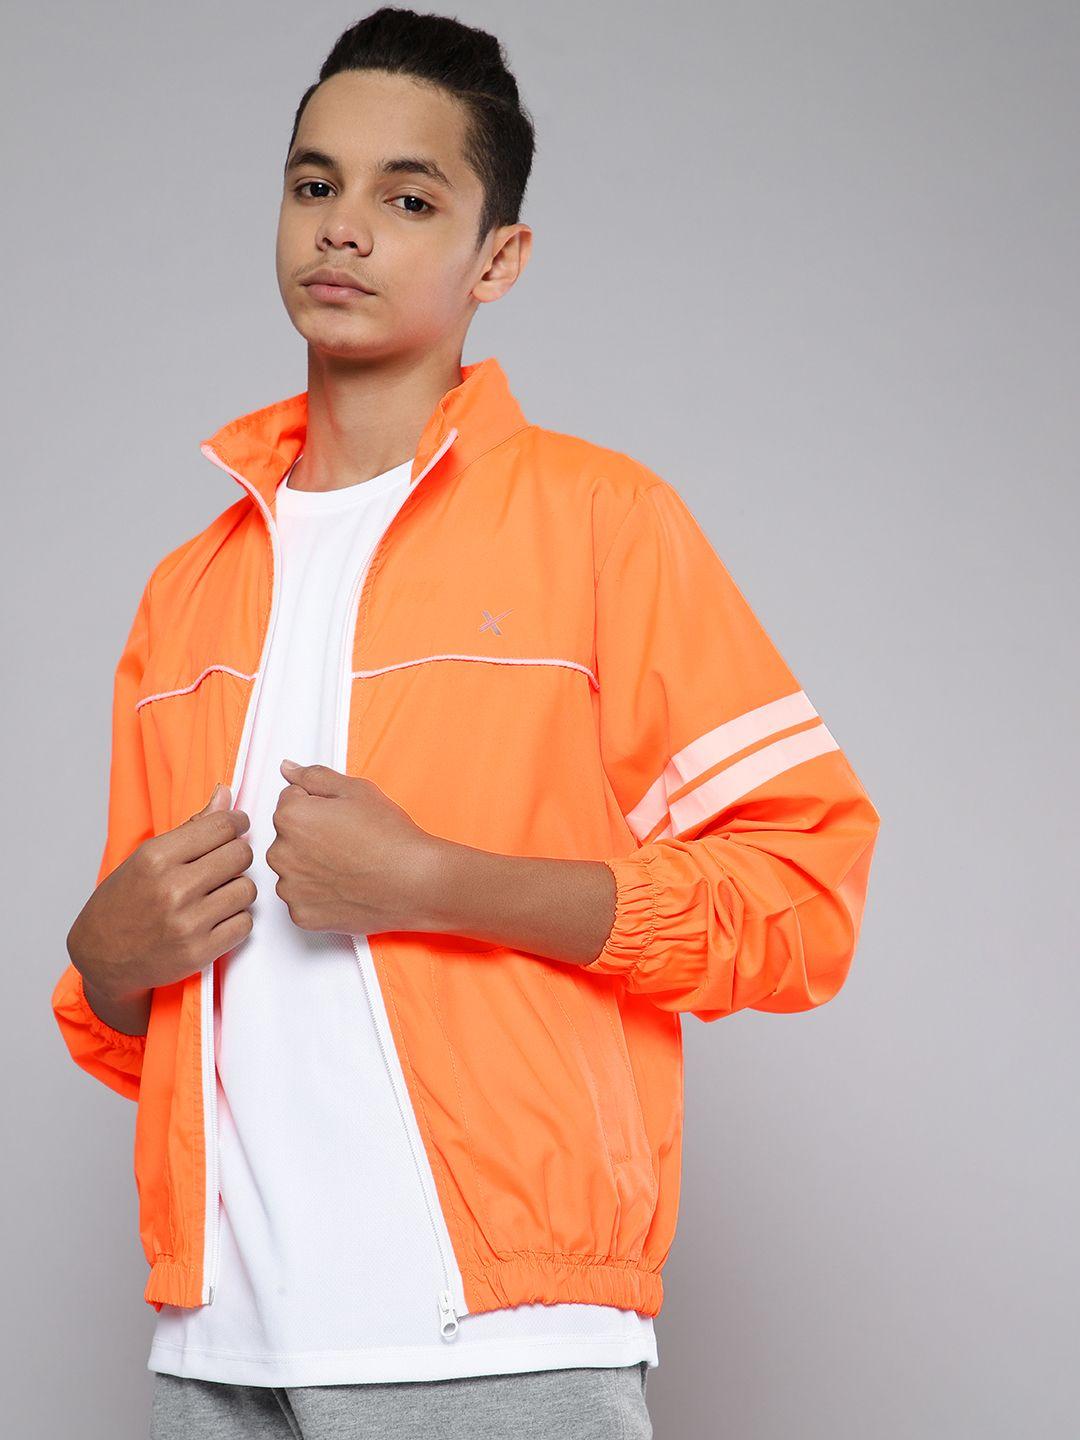 hrx by hrithik roshan u-17 active boys neon orange solid rapid-dry jacket